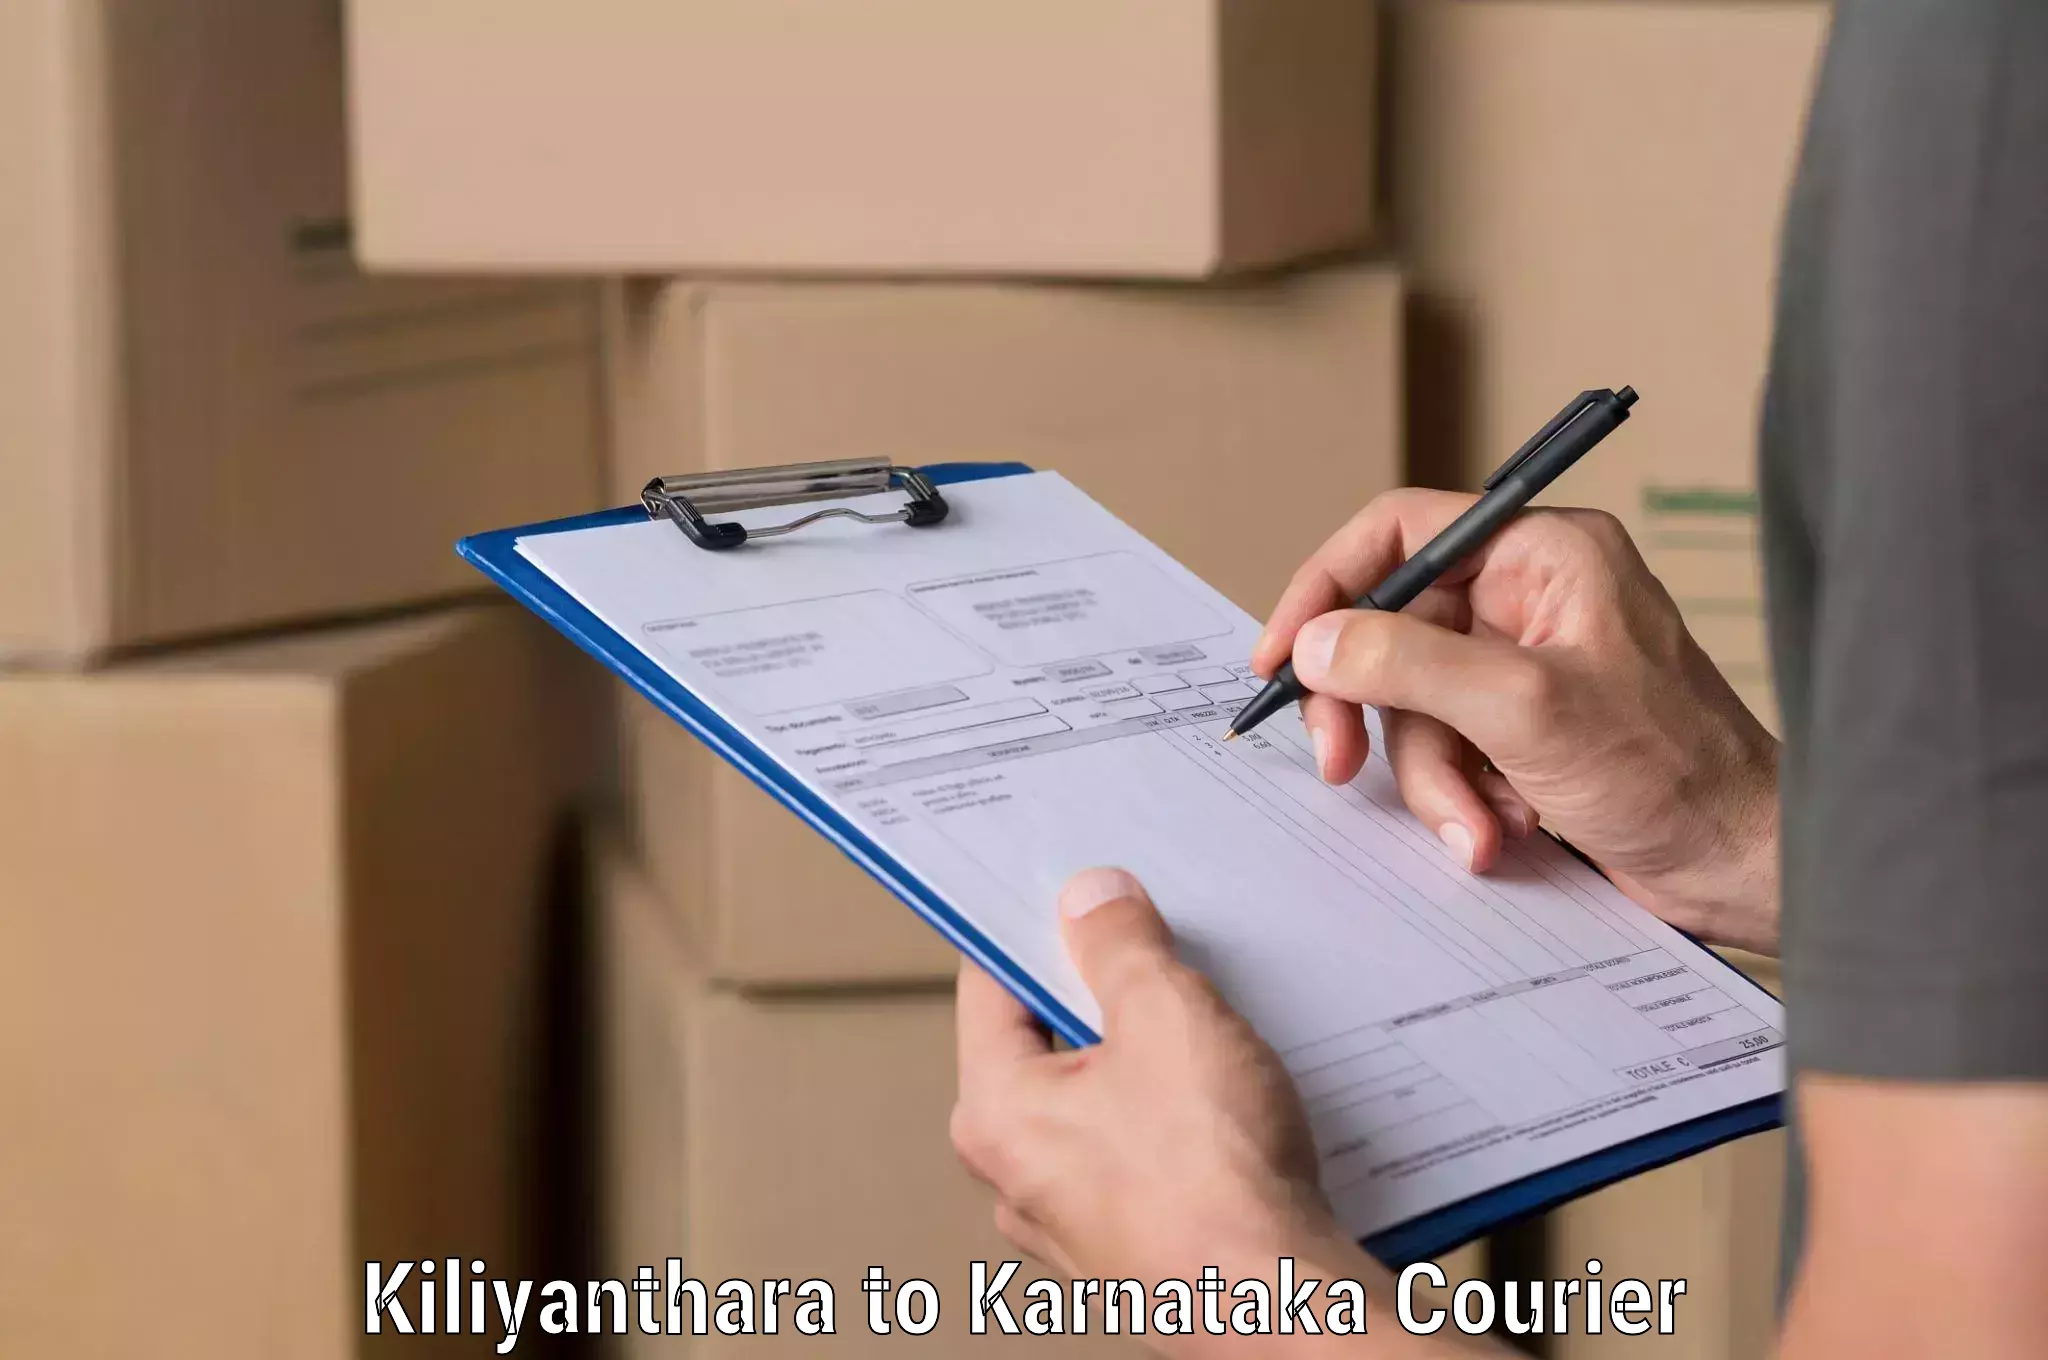 Global shipping networks in Kiliyanthara to Kotturu